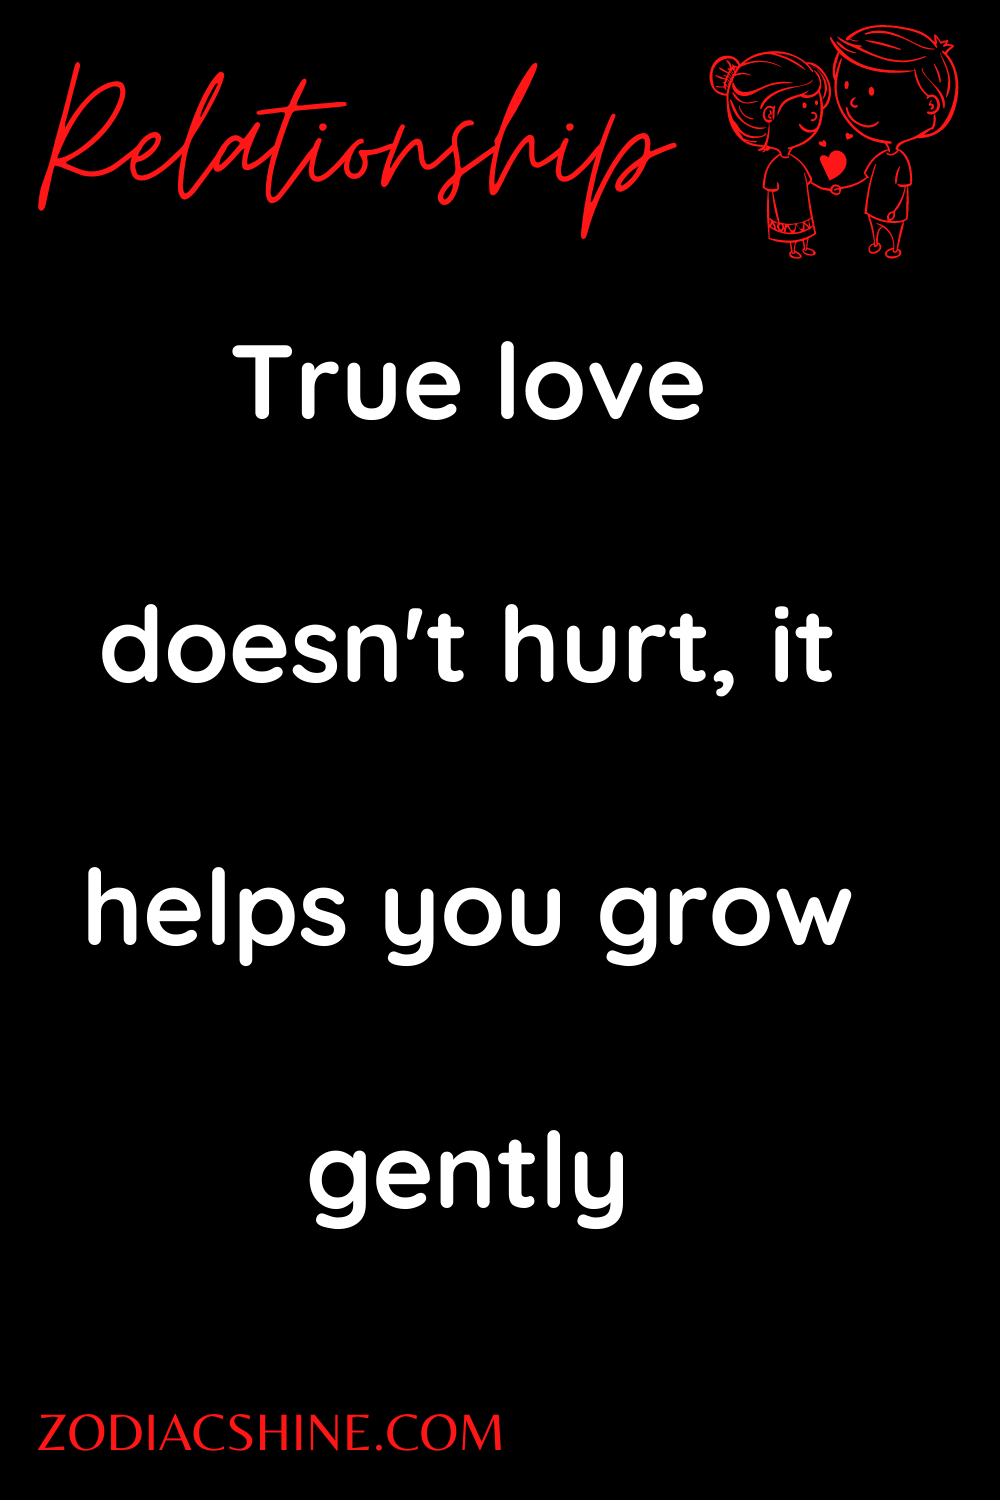 True love doesn't hurt, it helps you grow gently